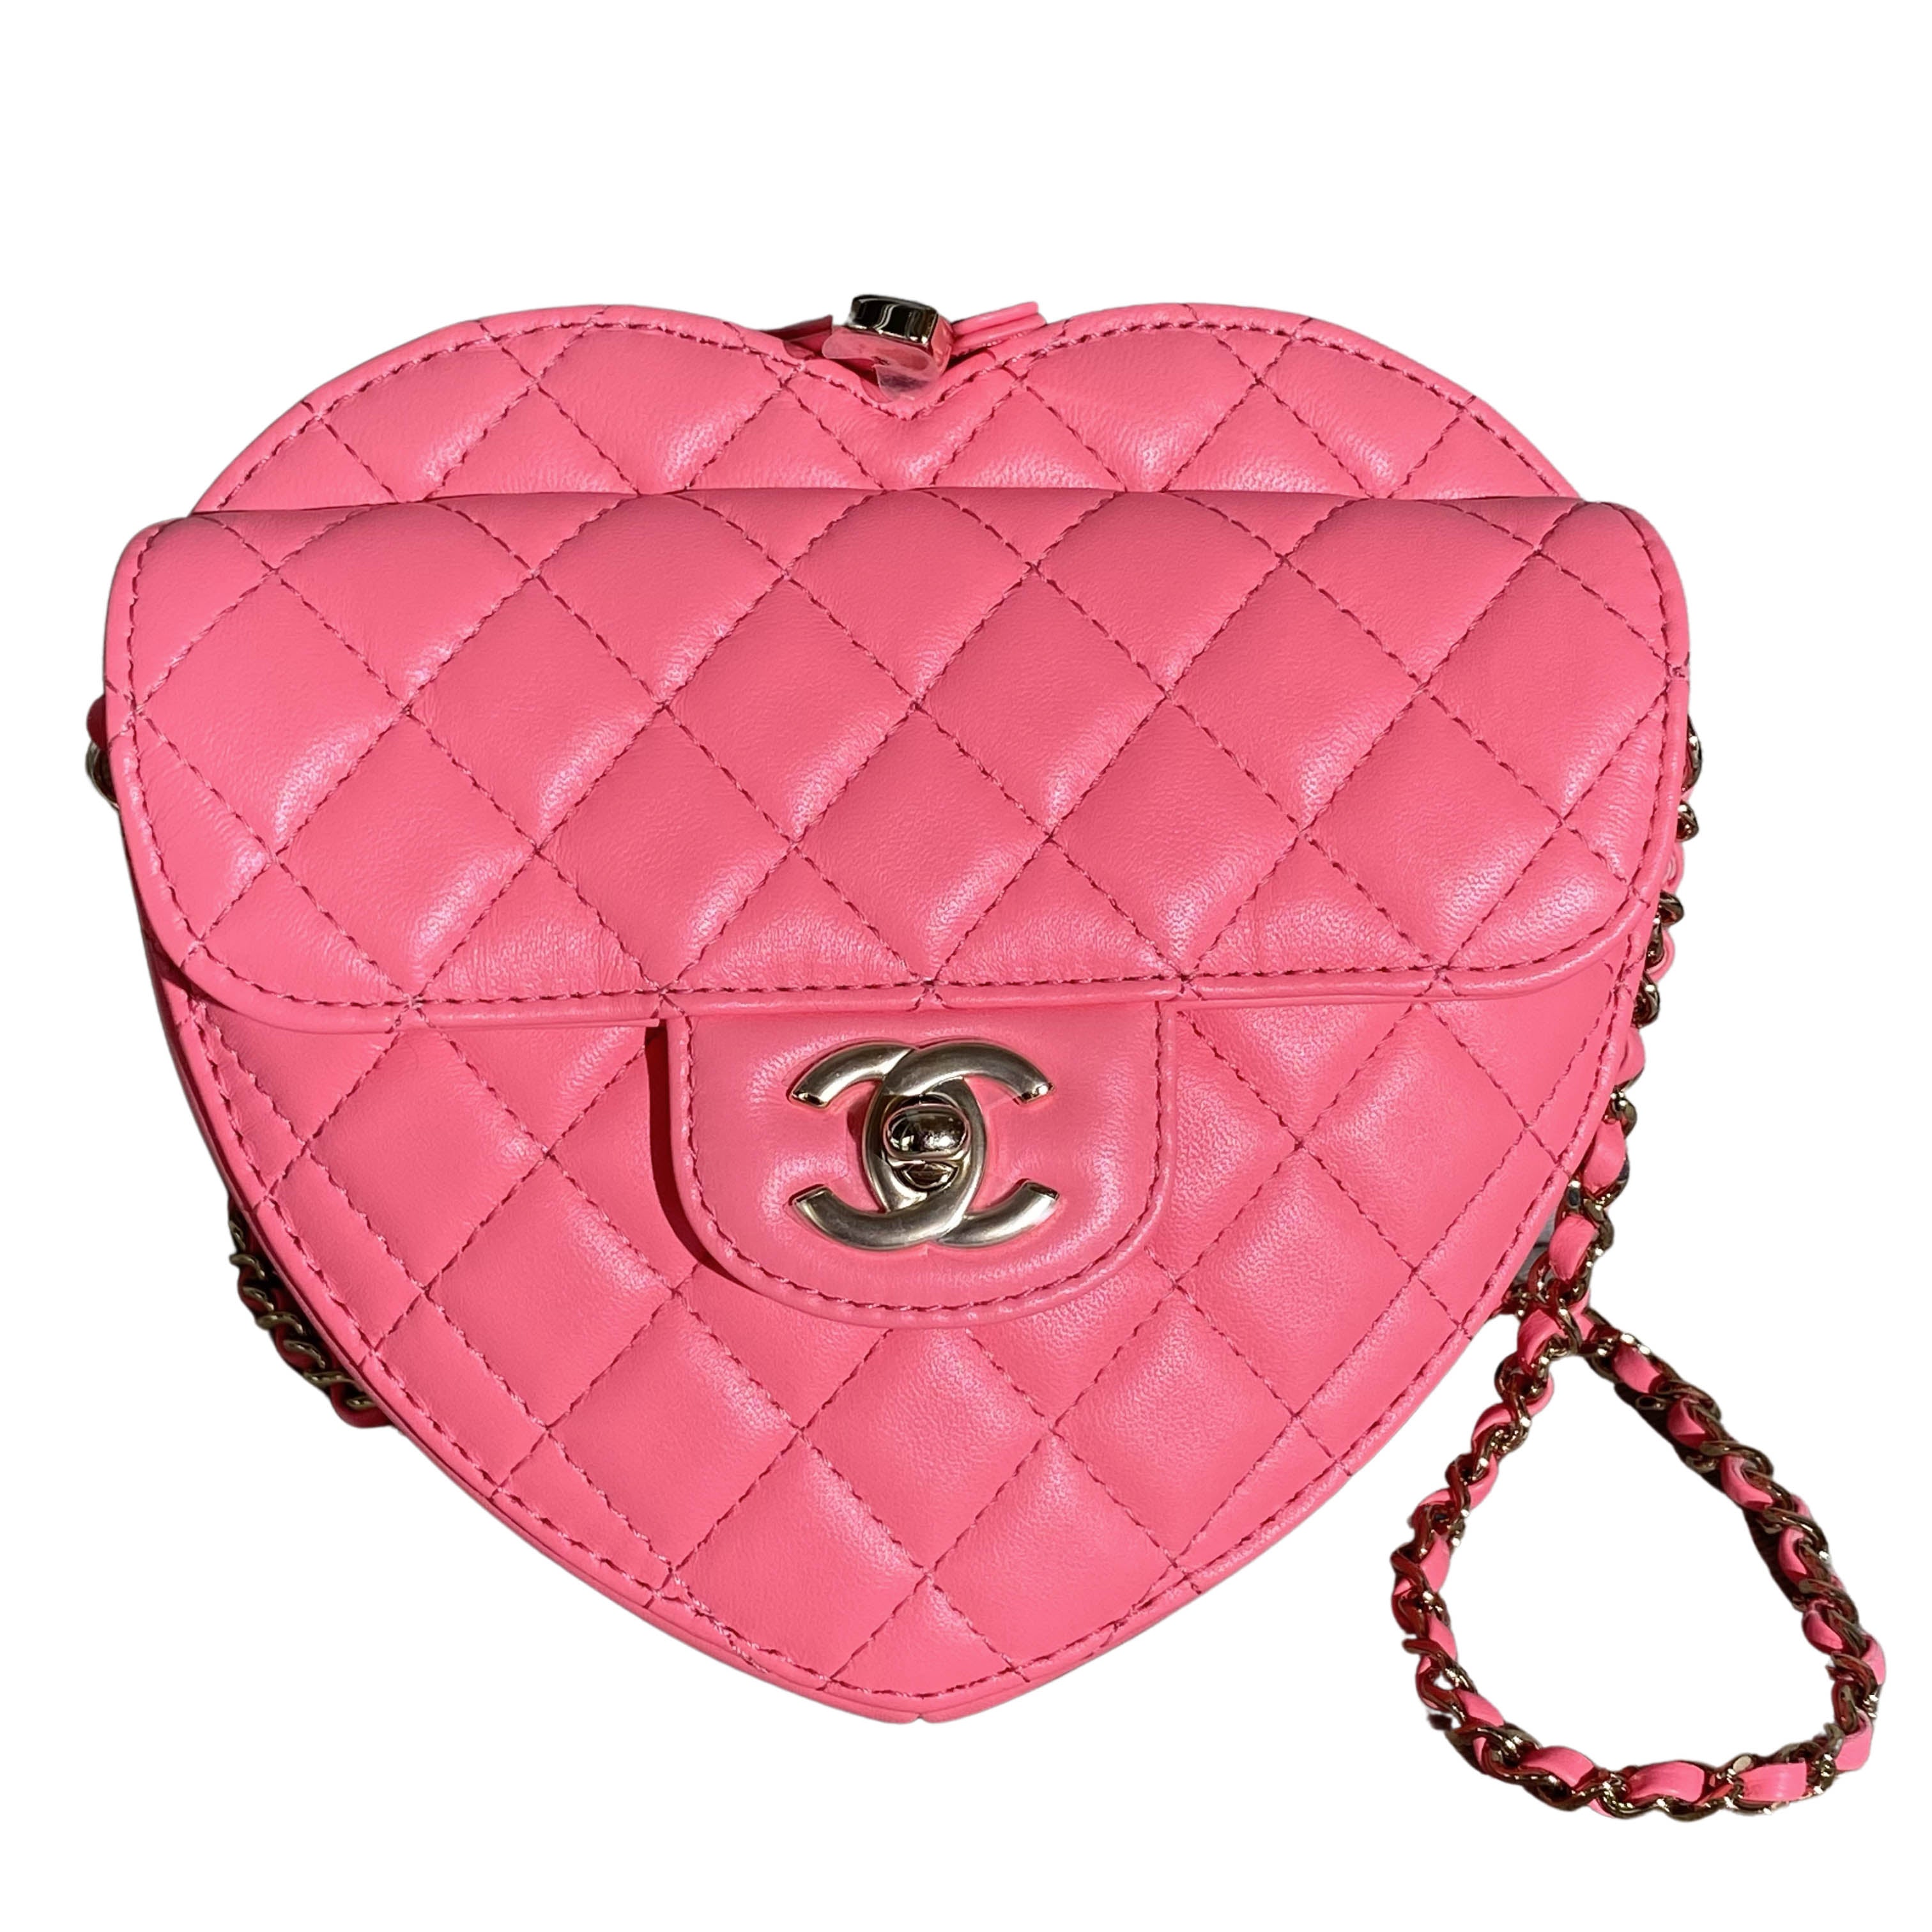 pink chanel heart bag large